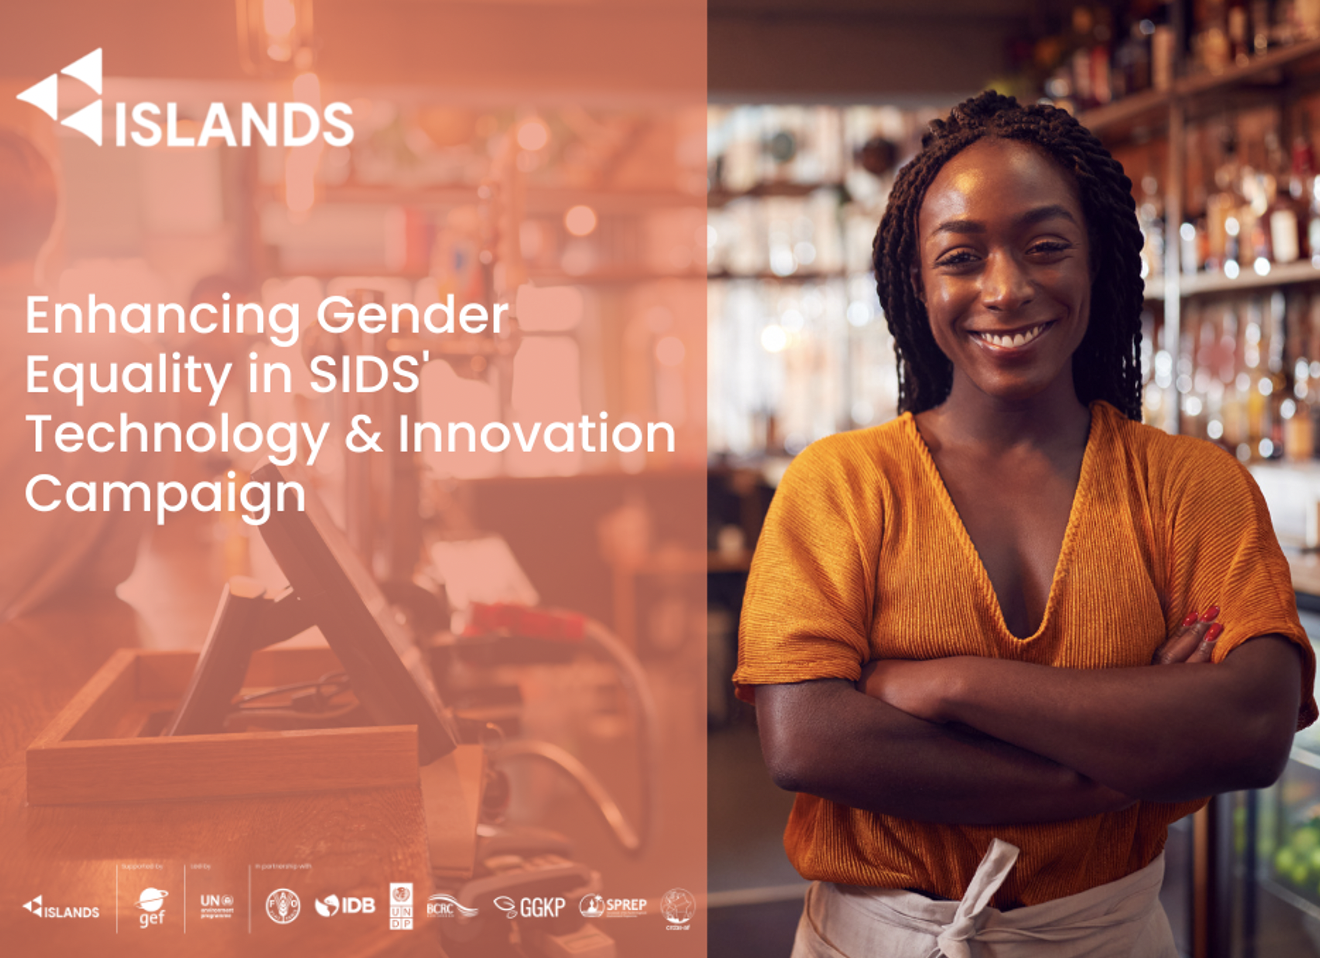 ISLANDS Gender Campaign